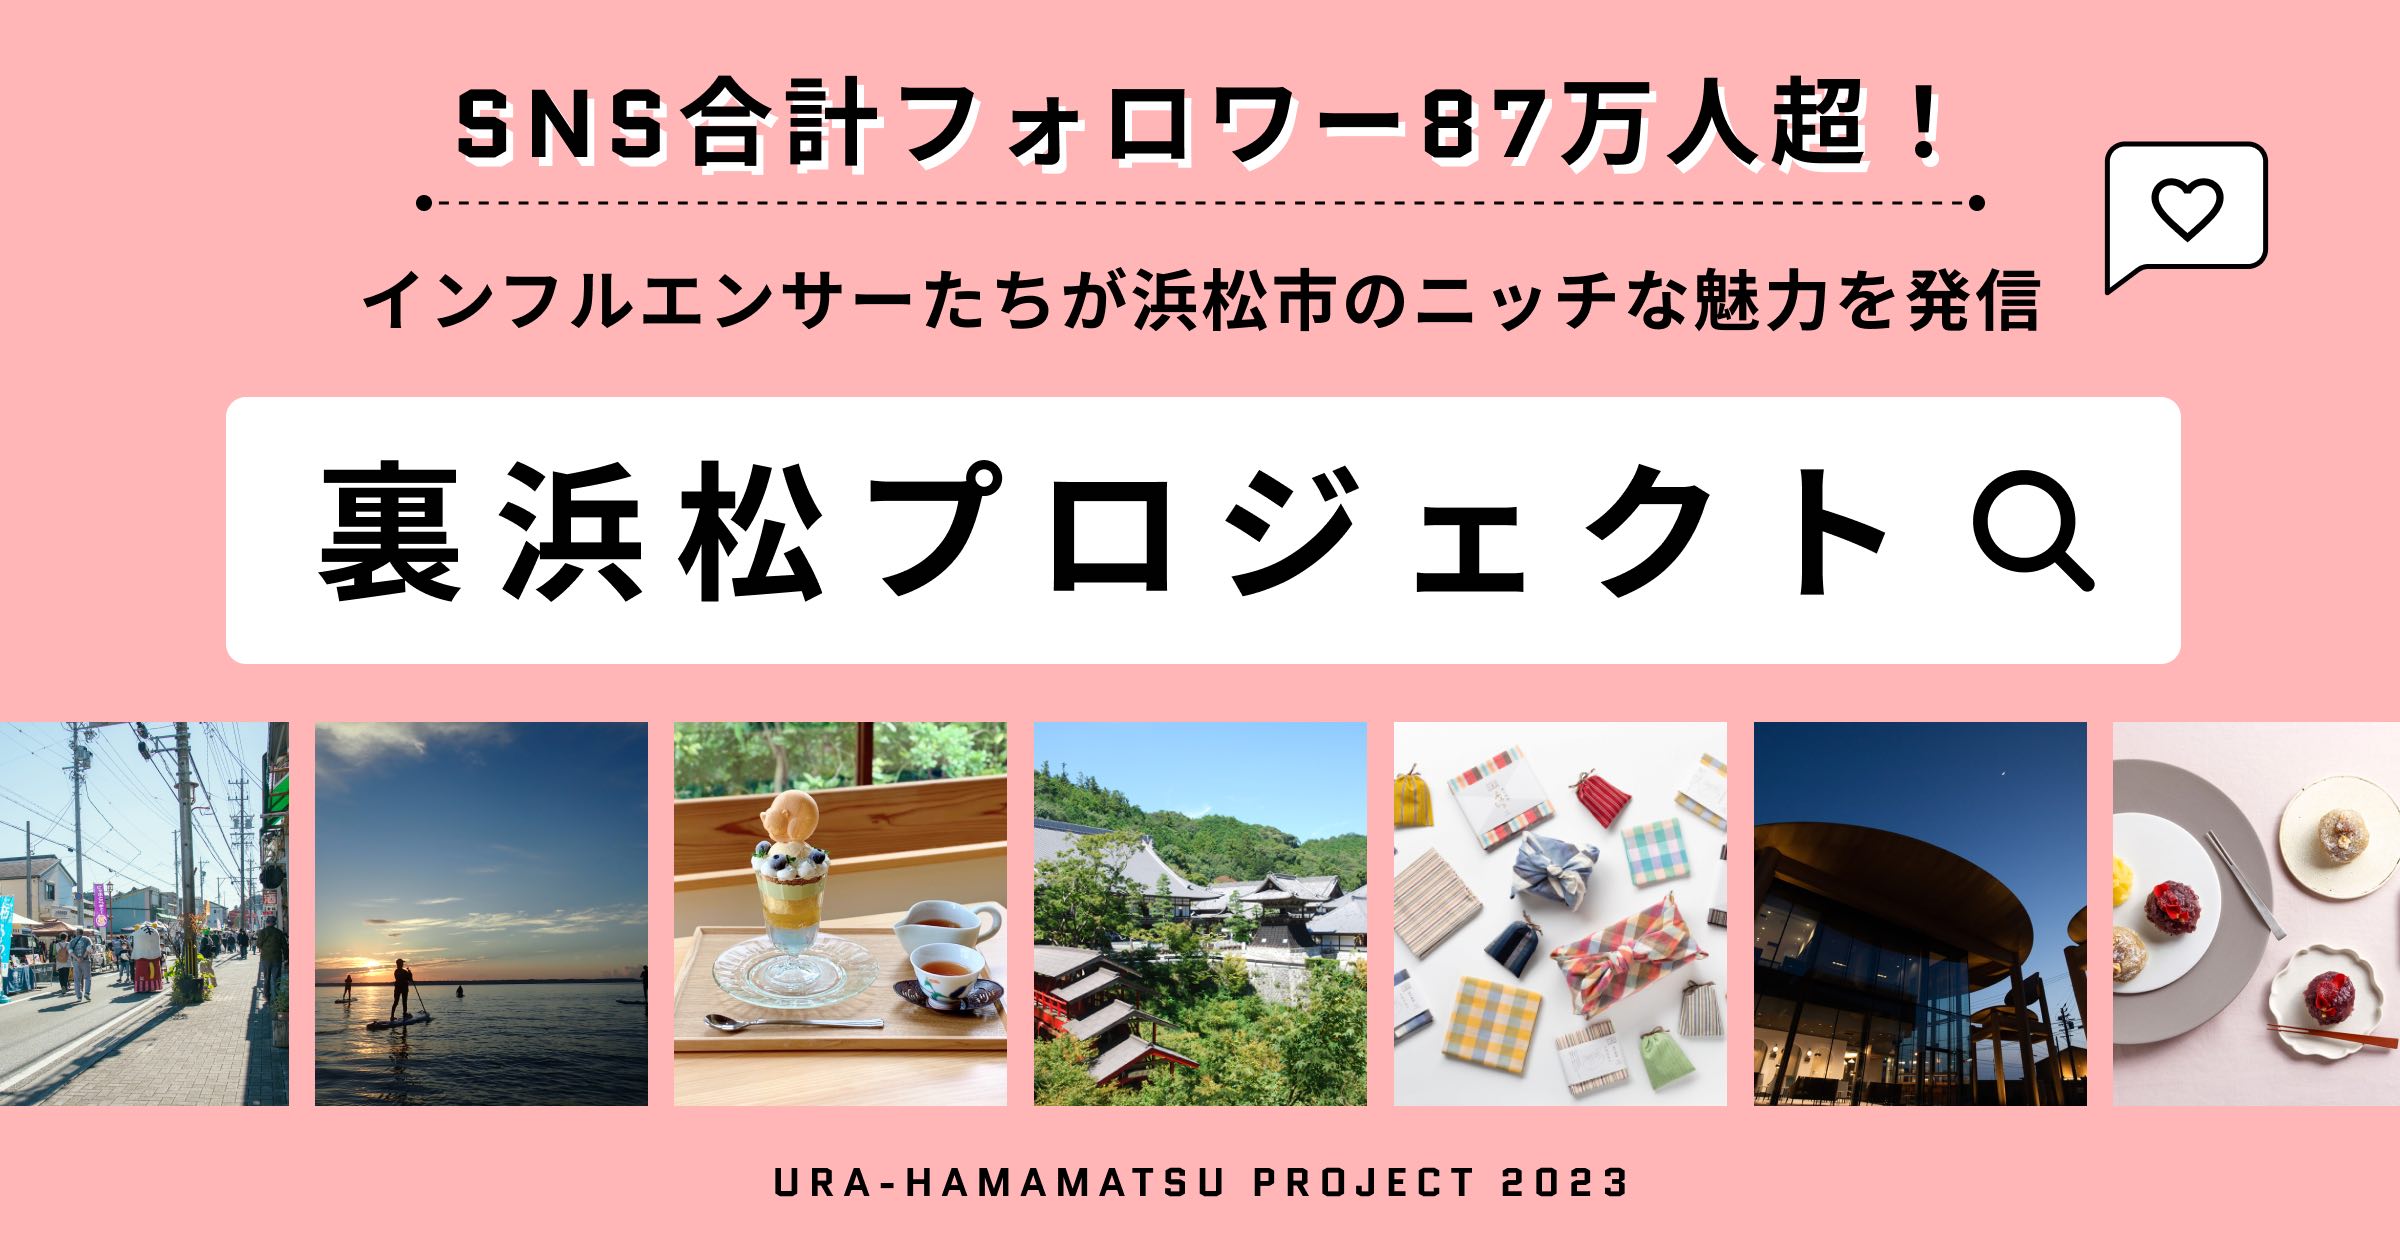 SNS合計フォロワー87万人超！インフルエンサーたちが浜松市のニッチな魅力を発信する『”裏浜松”プロジェクト』が始動！！